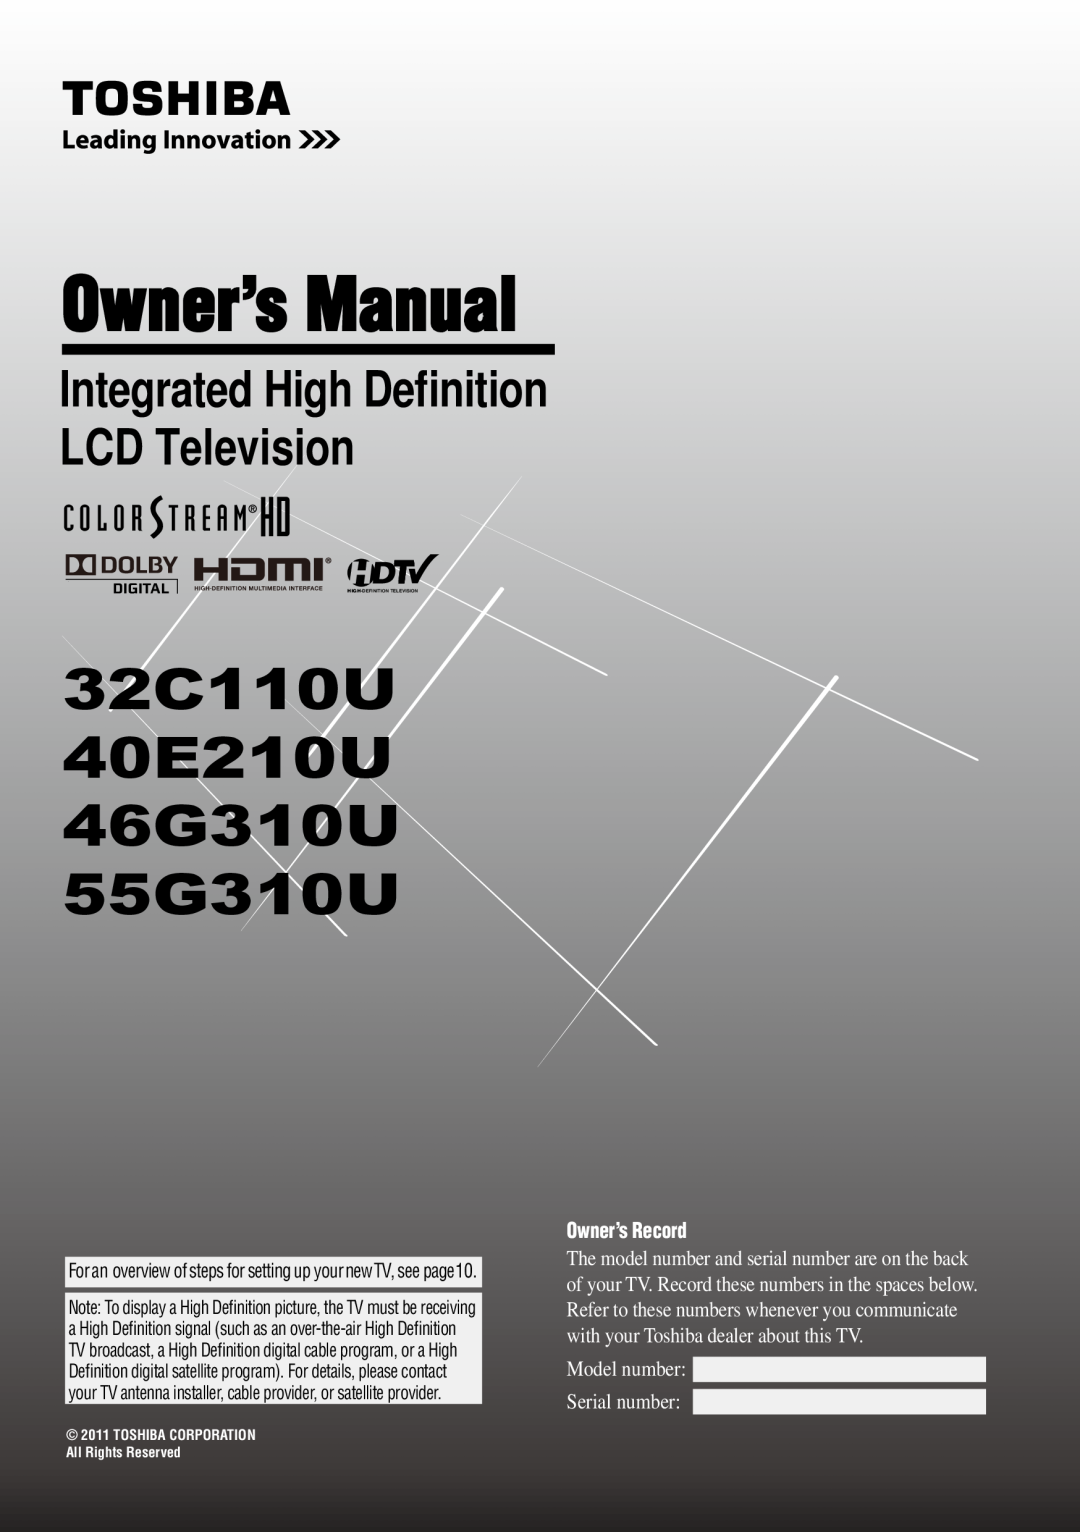 Toshiba owner manual Model number Serial number, Owner’s Manual, 32C110U 40E210U 46G310U 55G310U, Owner’s Record 